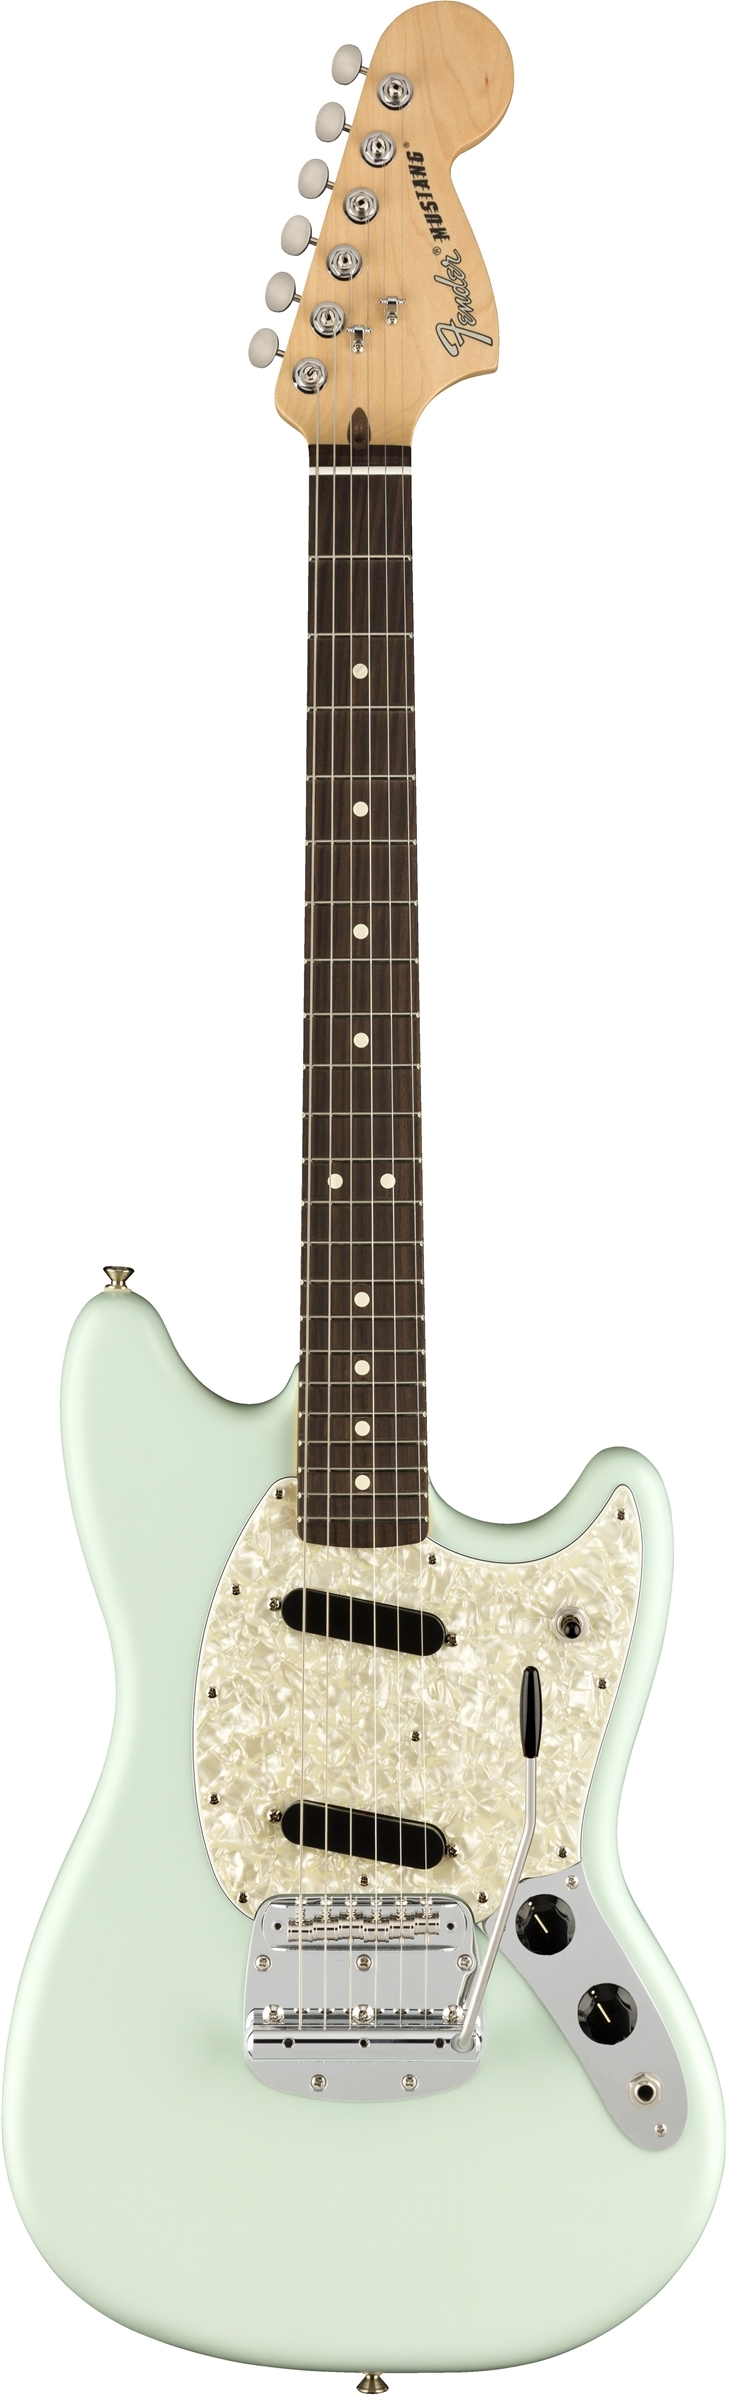 Fender American Performer Mustang Satin sonic blue